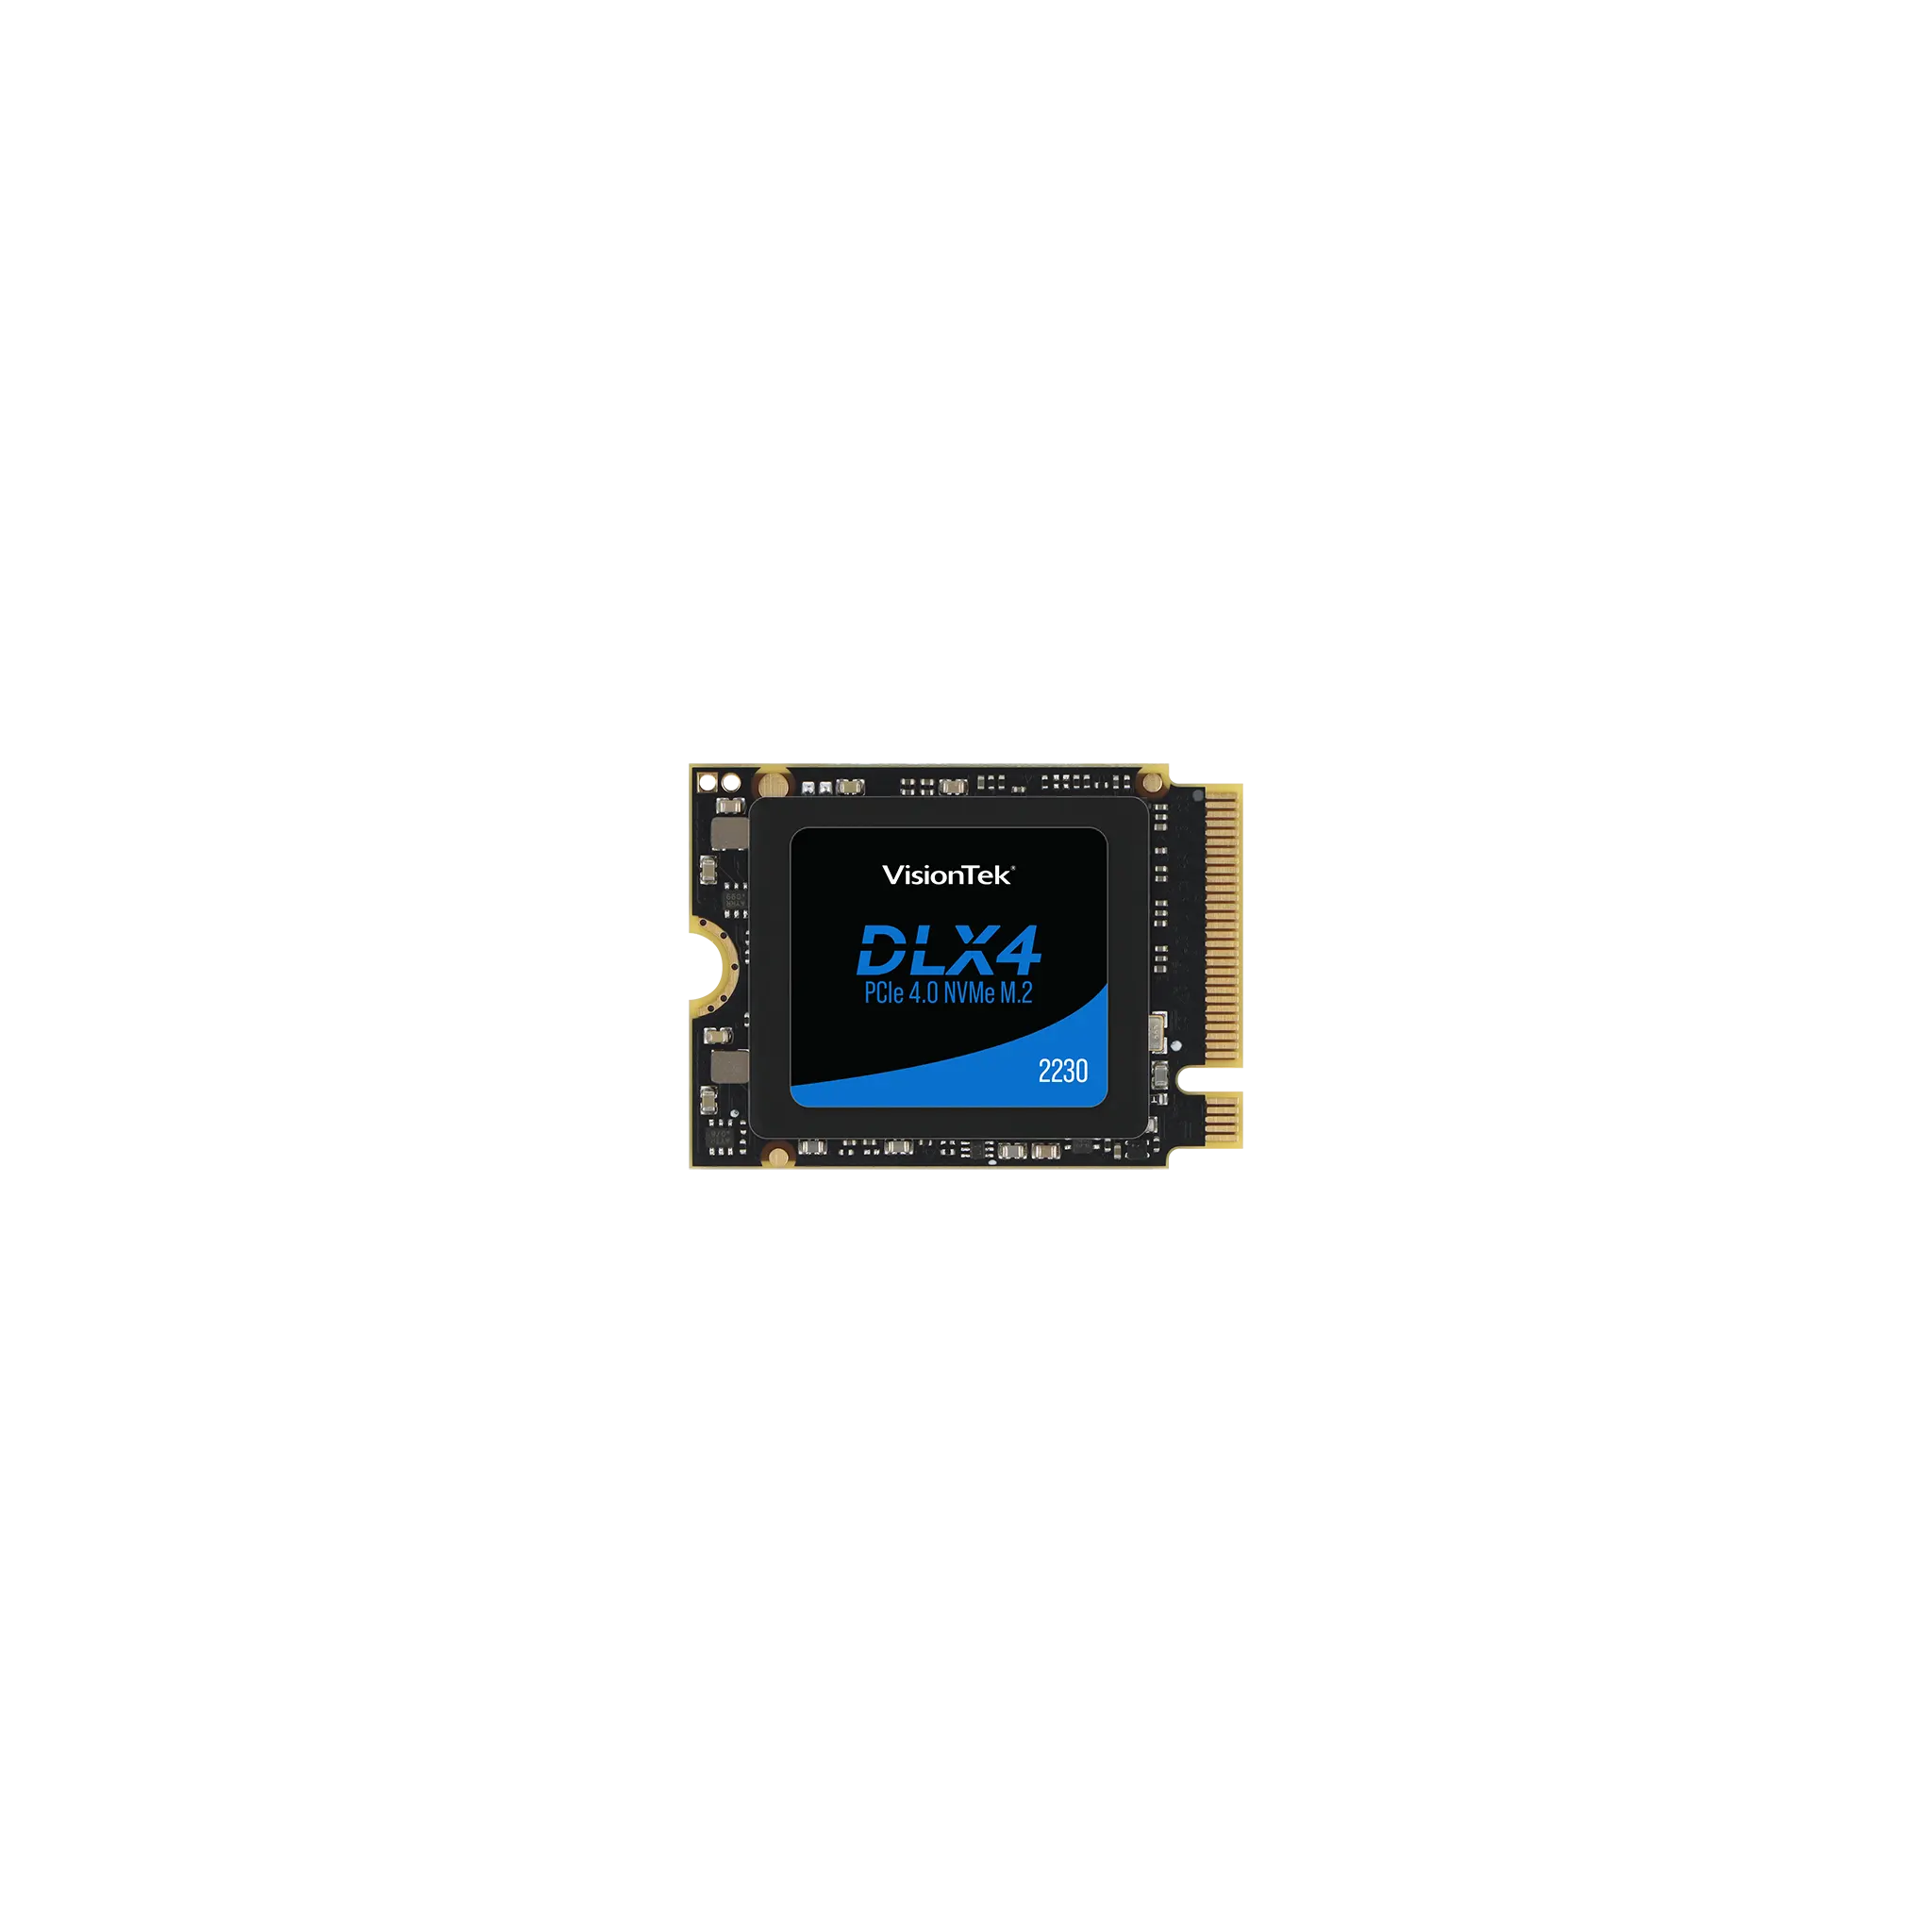 VisionTek DLX4 2230 M.2 PCIe 4.0 x4 SSD (NVMe) OPAL 2.0 SED –